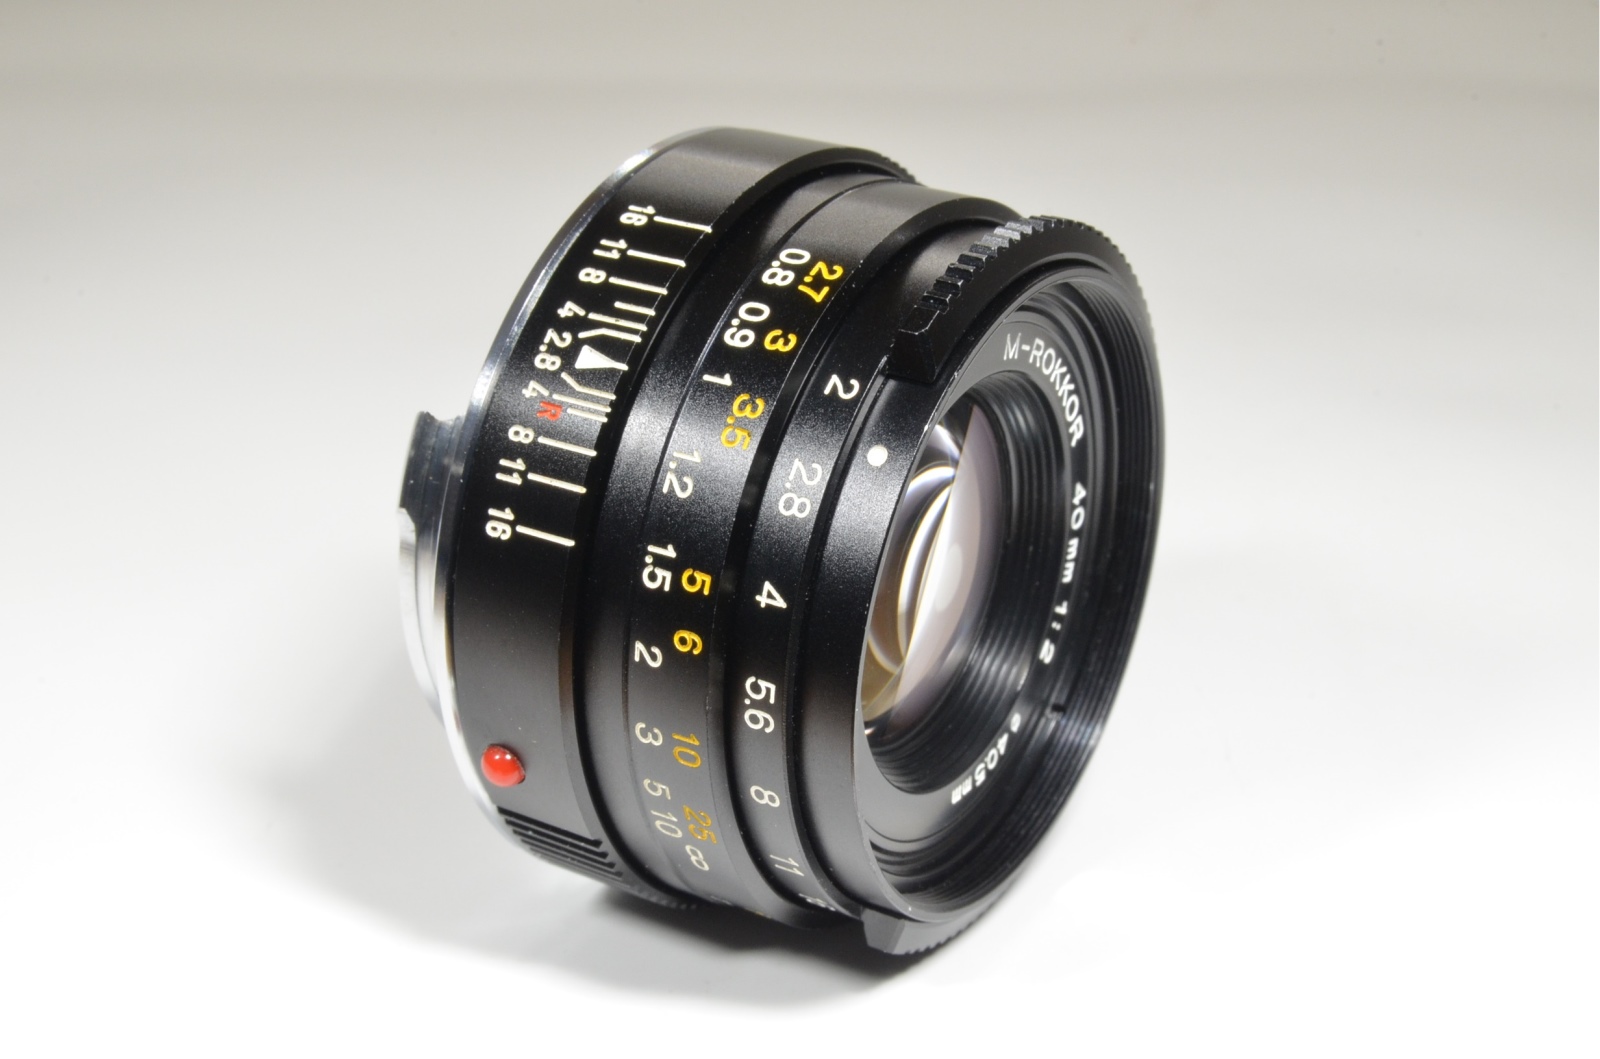 minolta cle 35mm film camera with m-rokkor 40mm f2, 28mm f2.8, 90mm f4 and flash